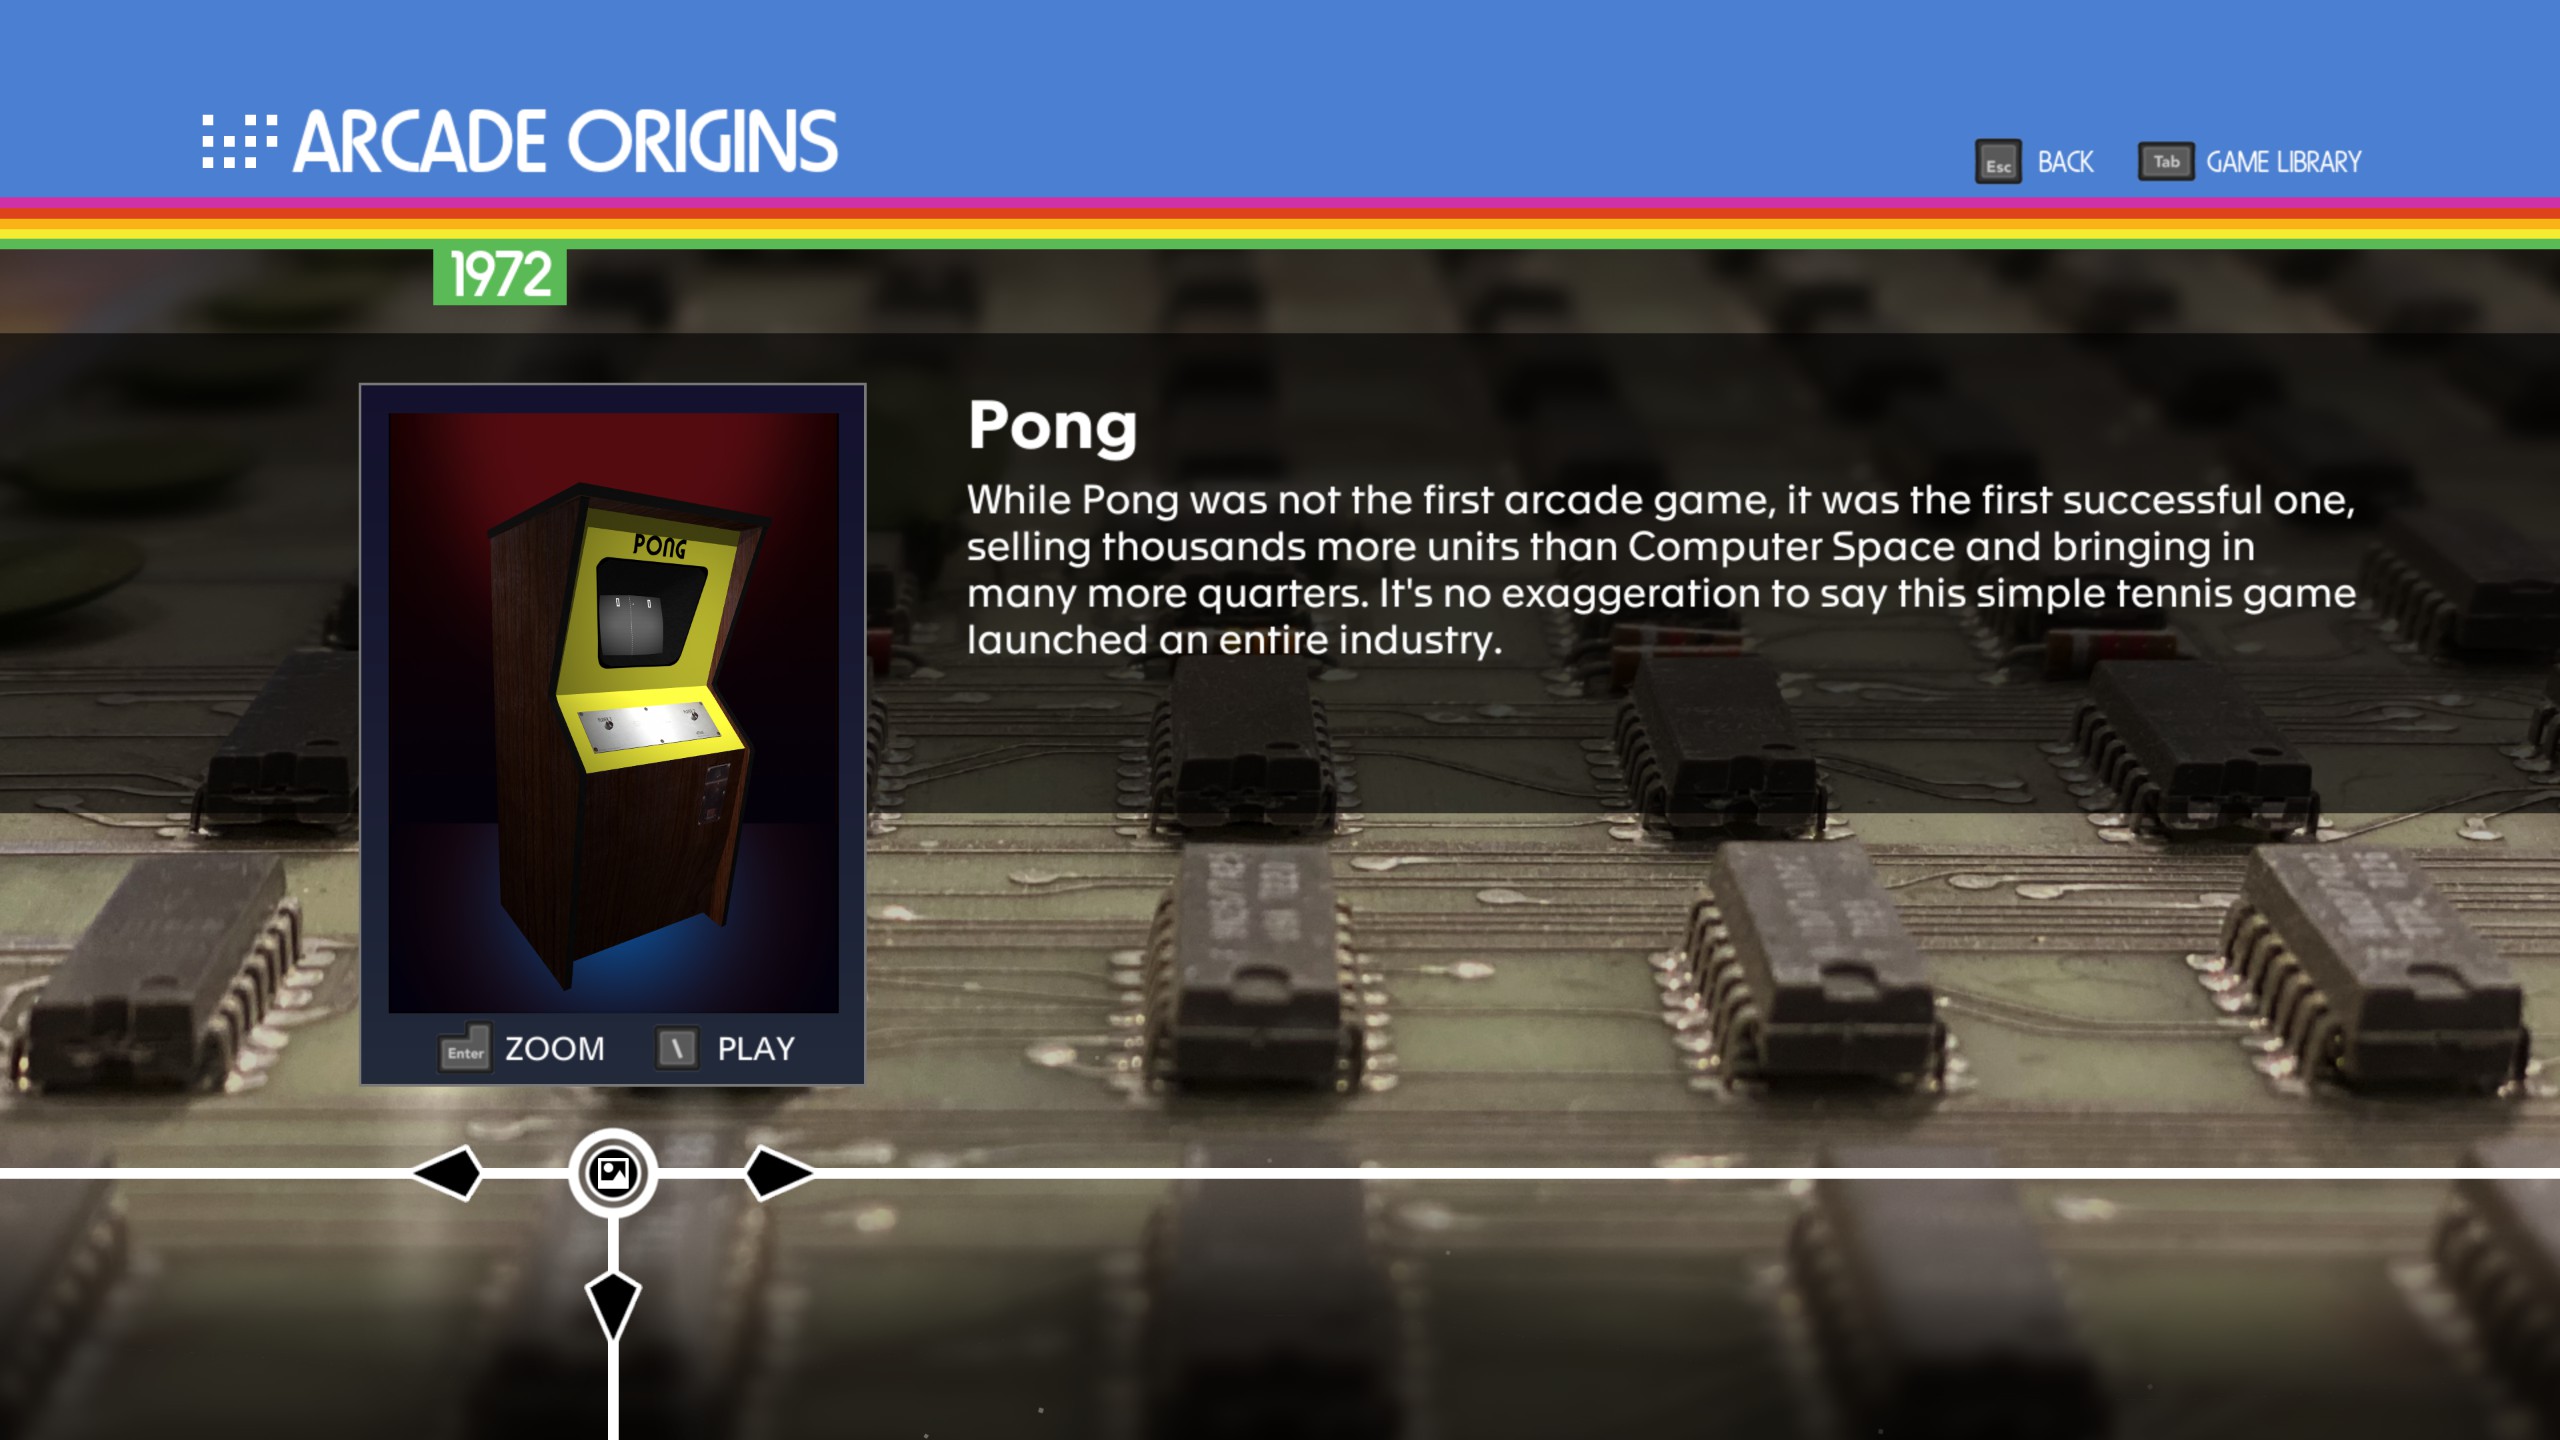 Image and description of a Pong arcade machine